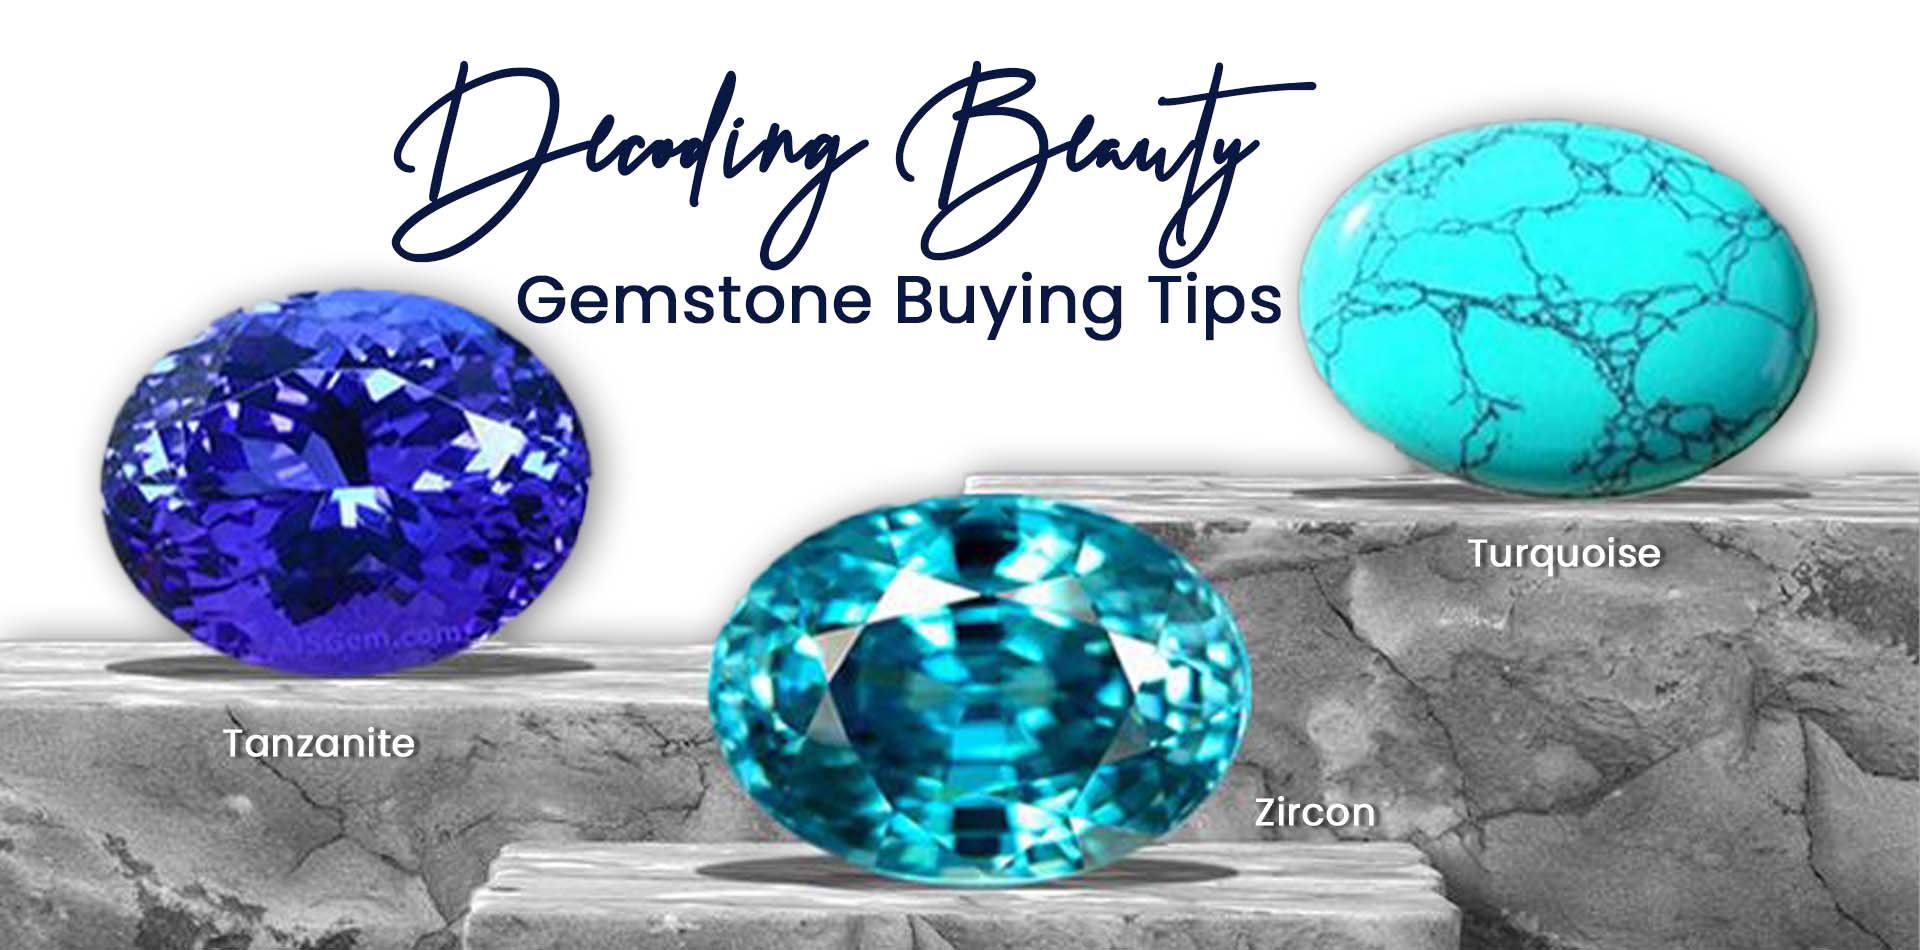 Decoding Beauty: Tanzanite, Turquoise, and Zircon Gemstone Buying Tips